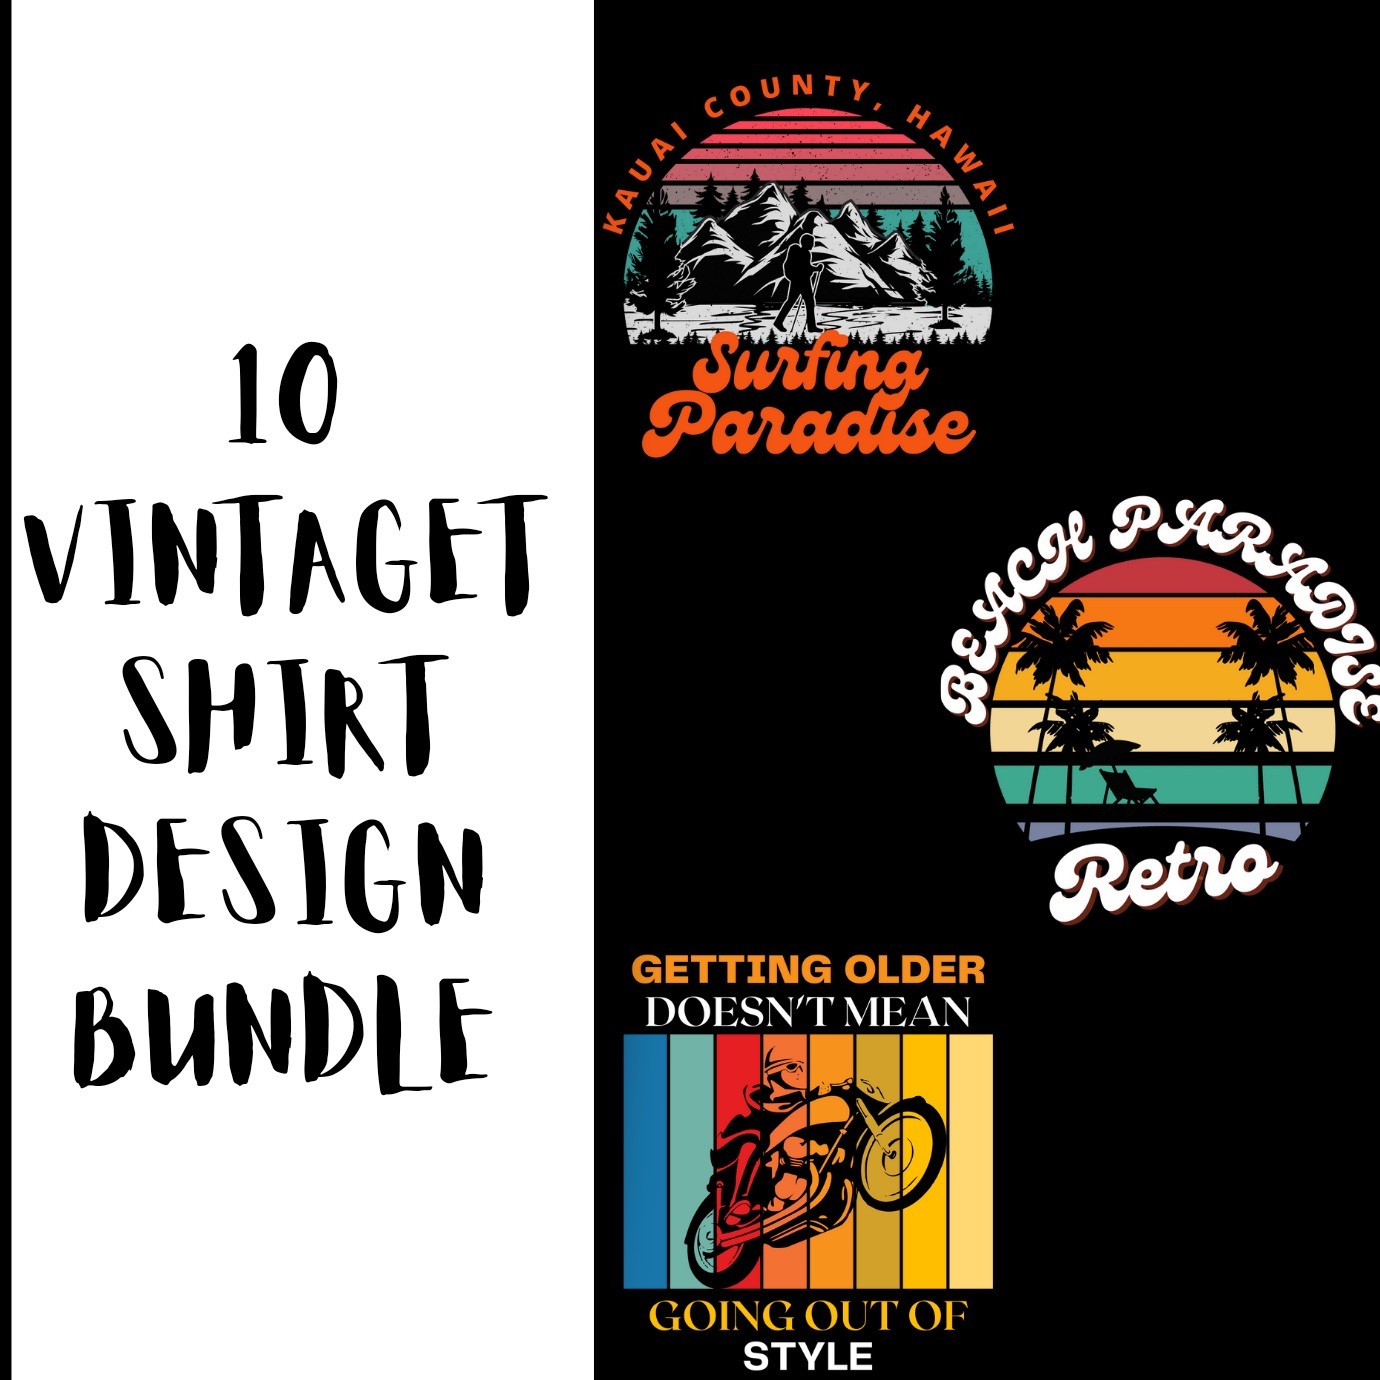 10 Vintage Tshirt Design Bundle Collection cover image.